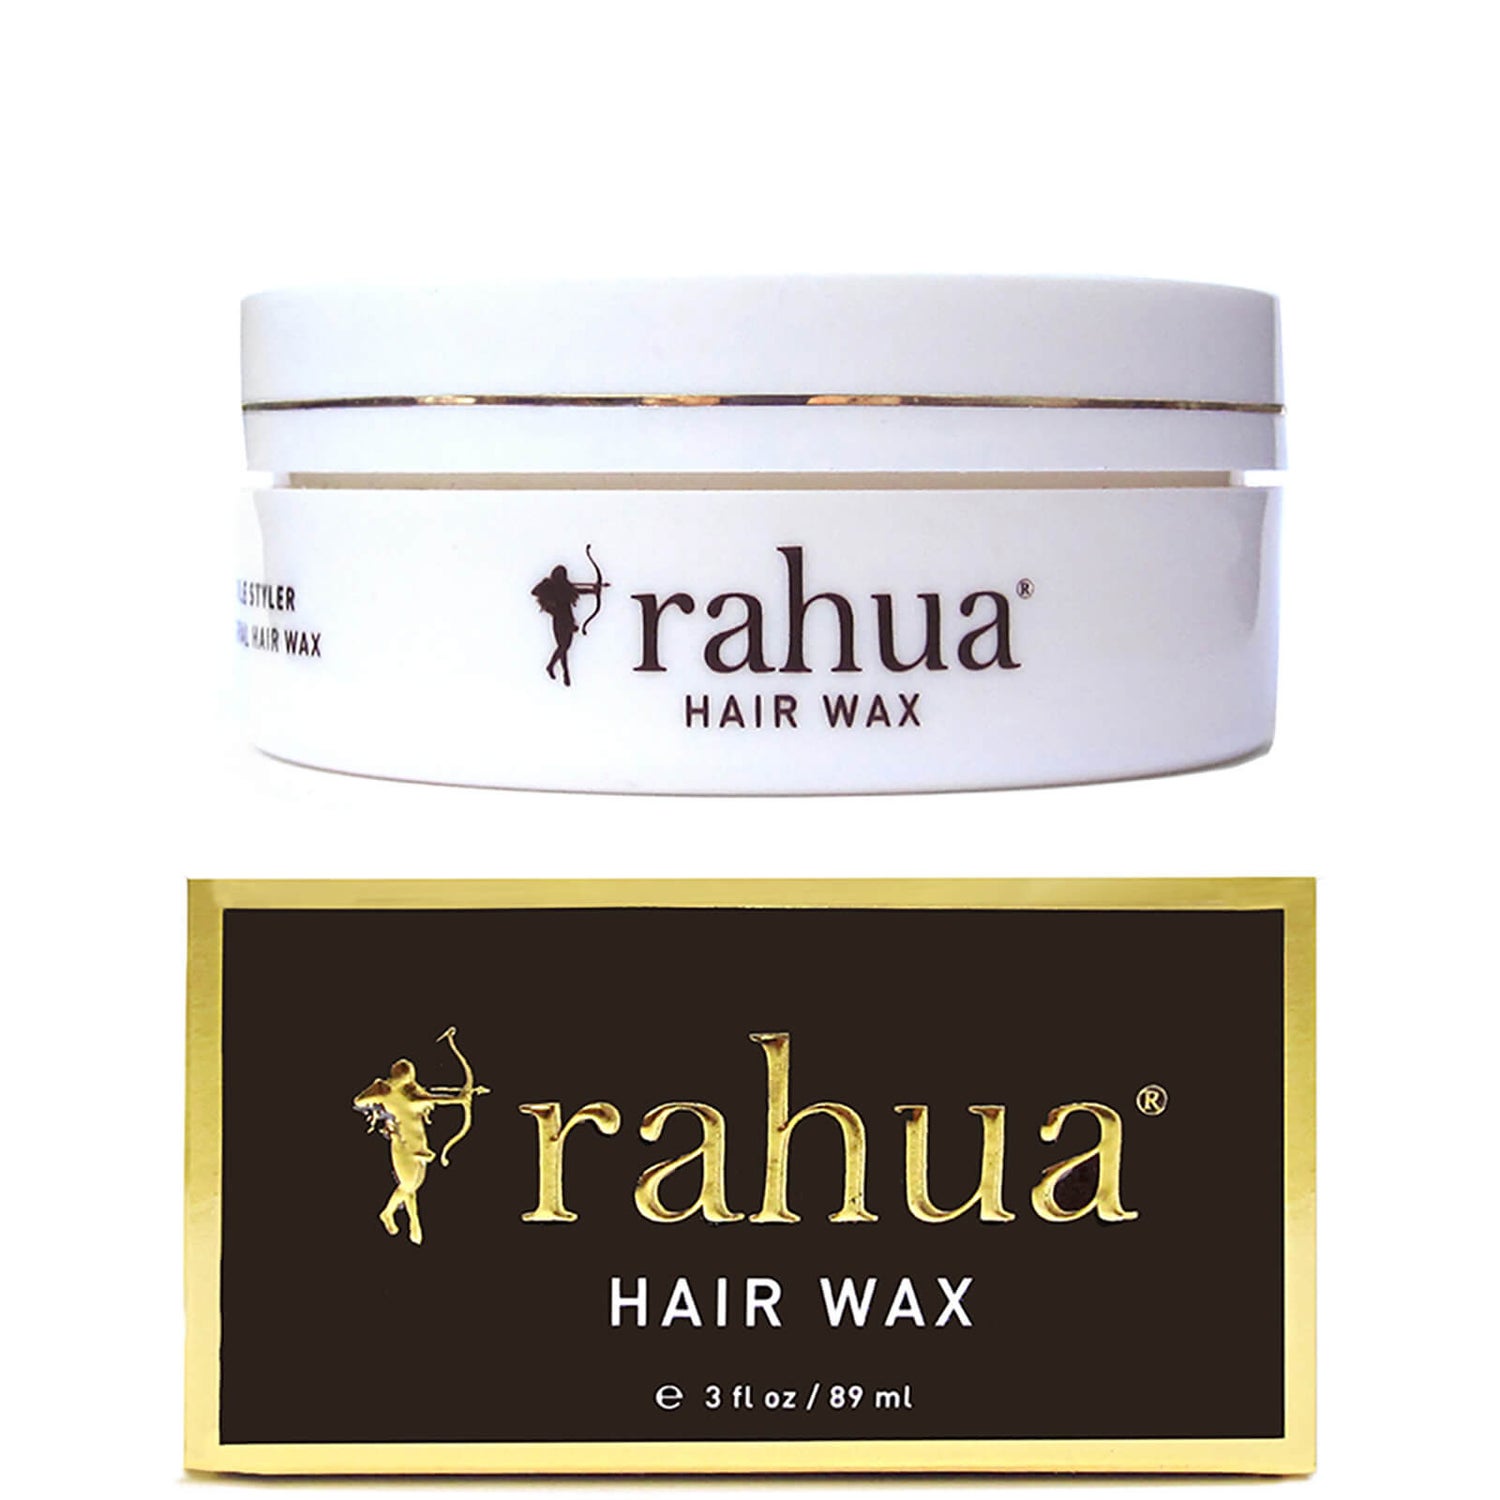 Rahua Hair Wax | lookfantastic Singapore